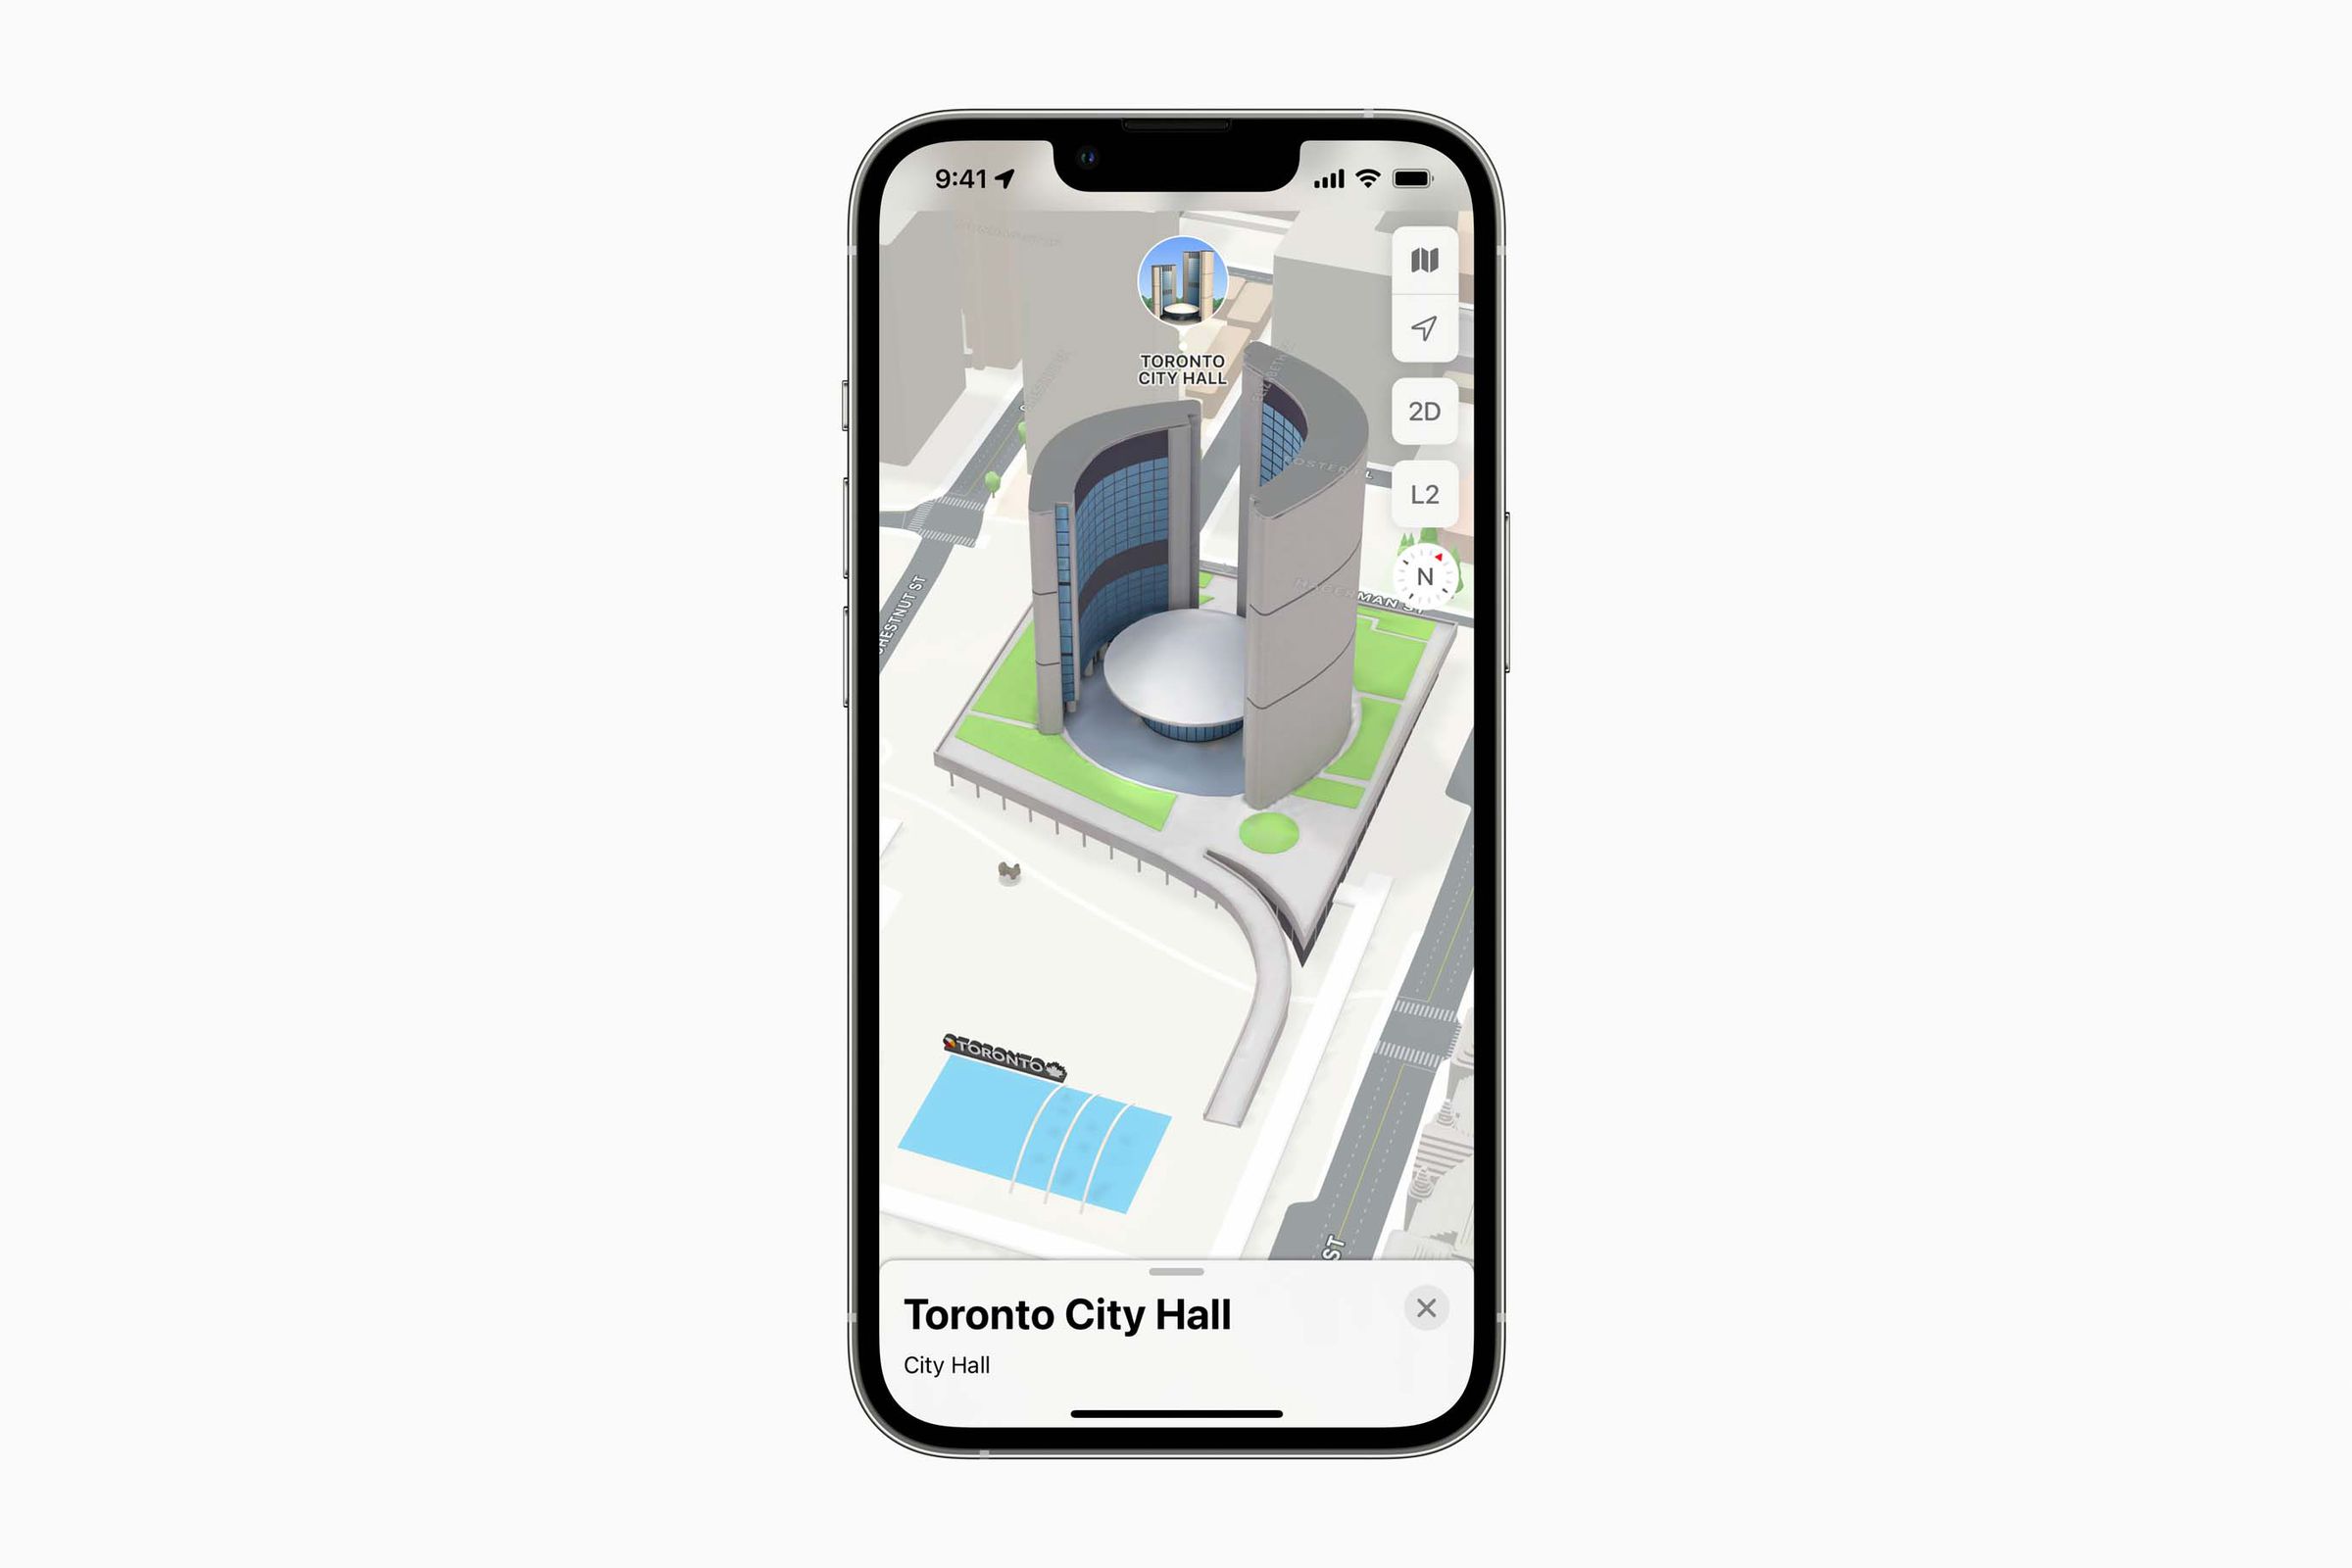 A 3D view of Toronto’s City Hall.